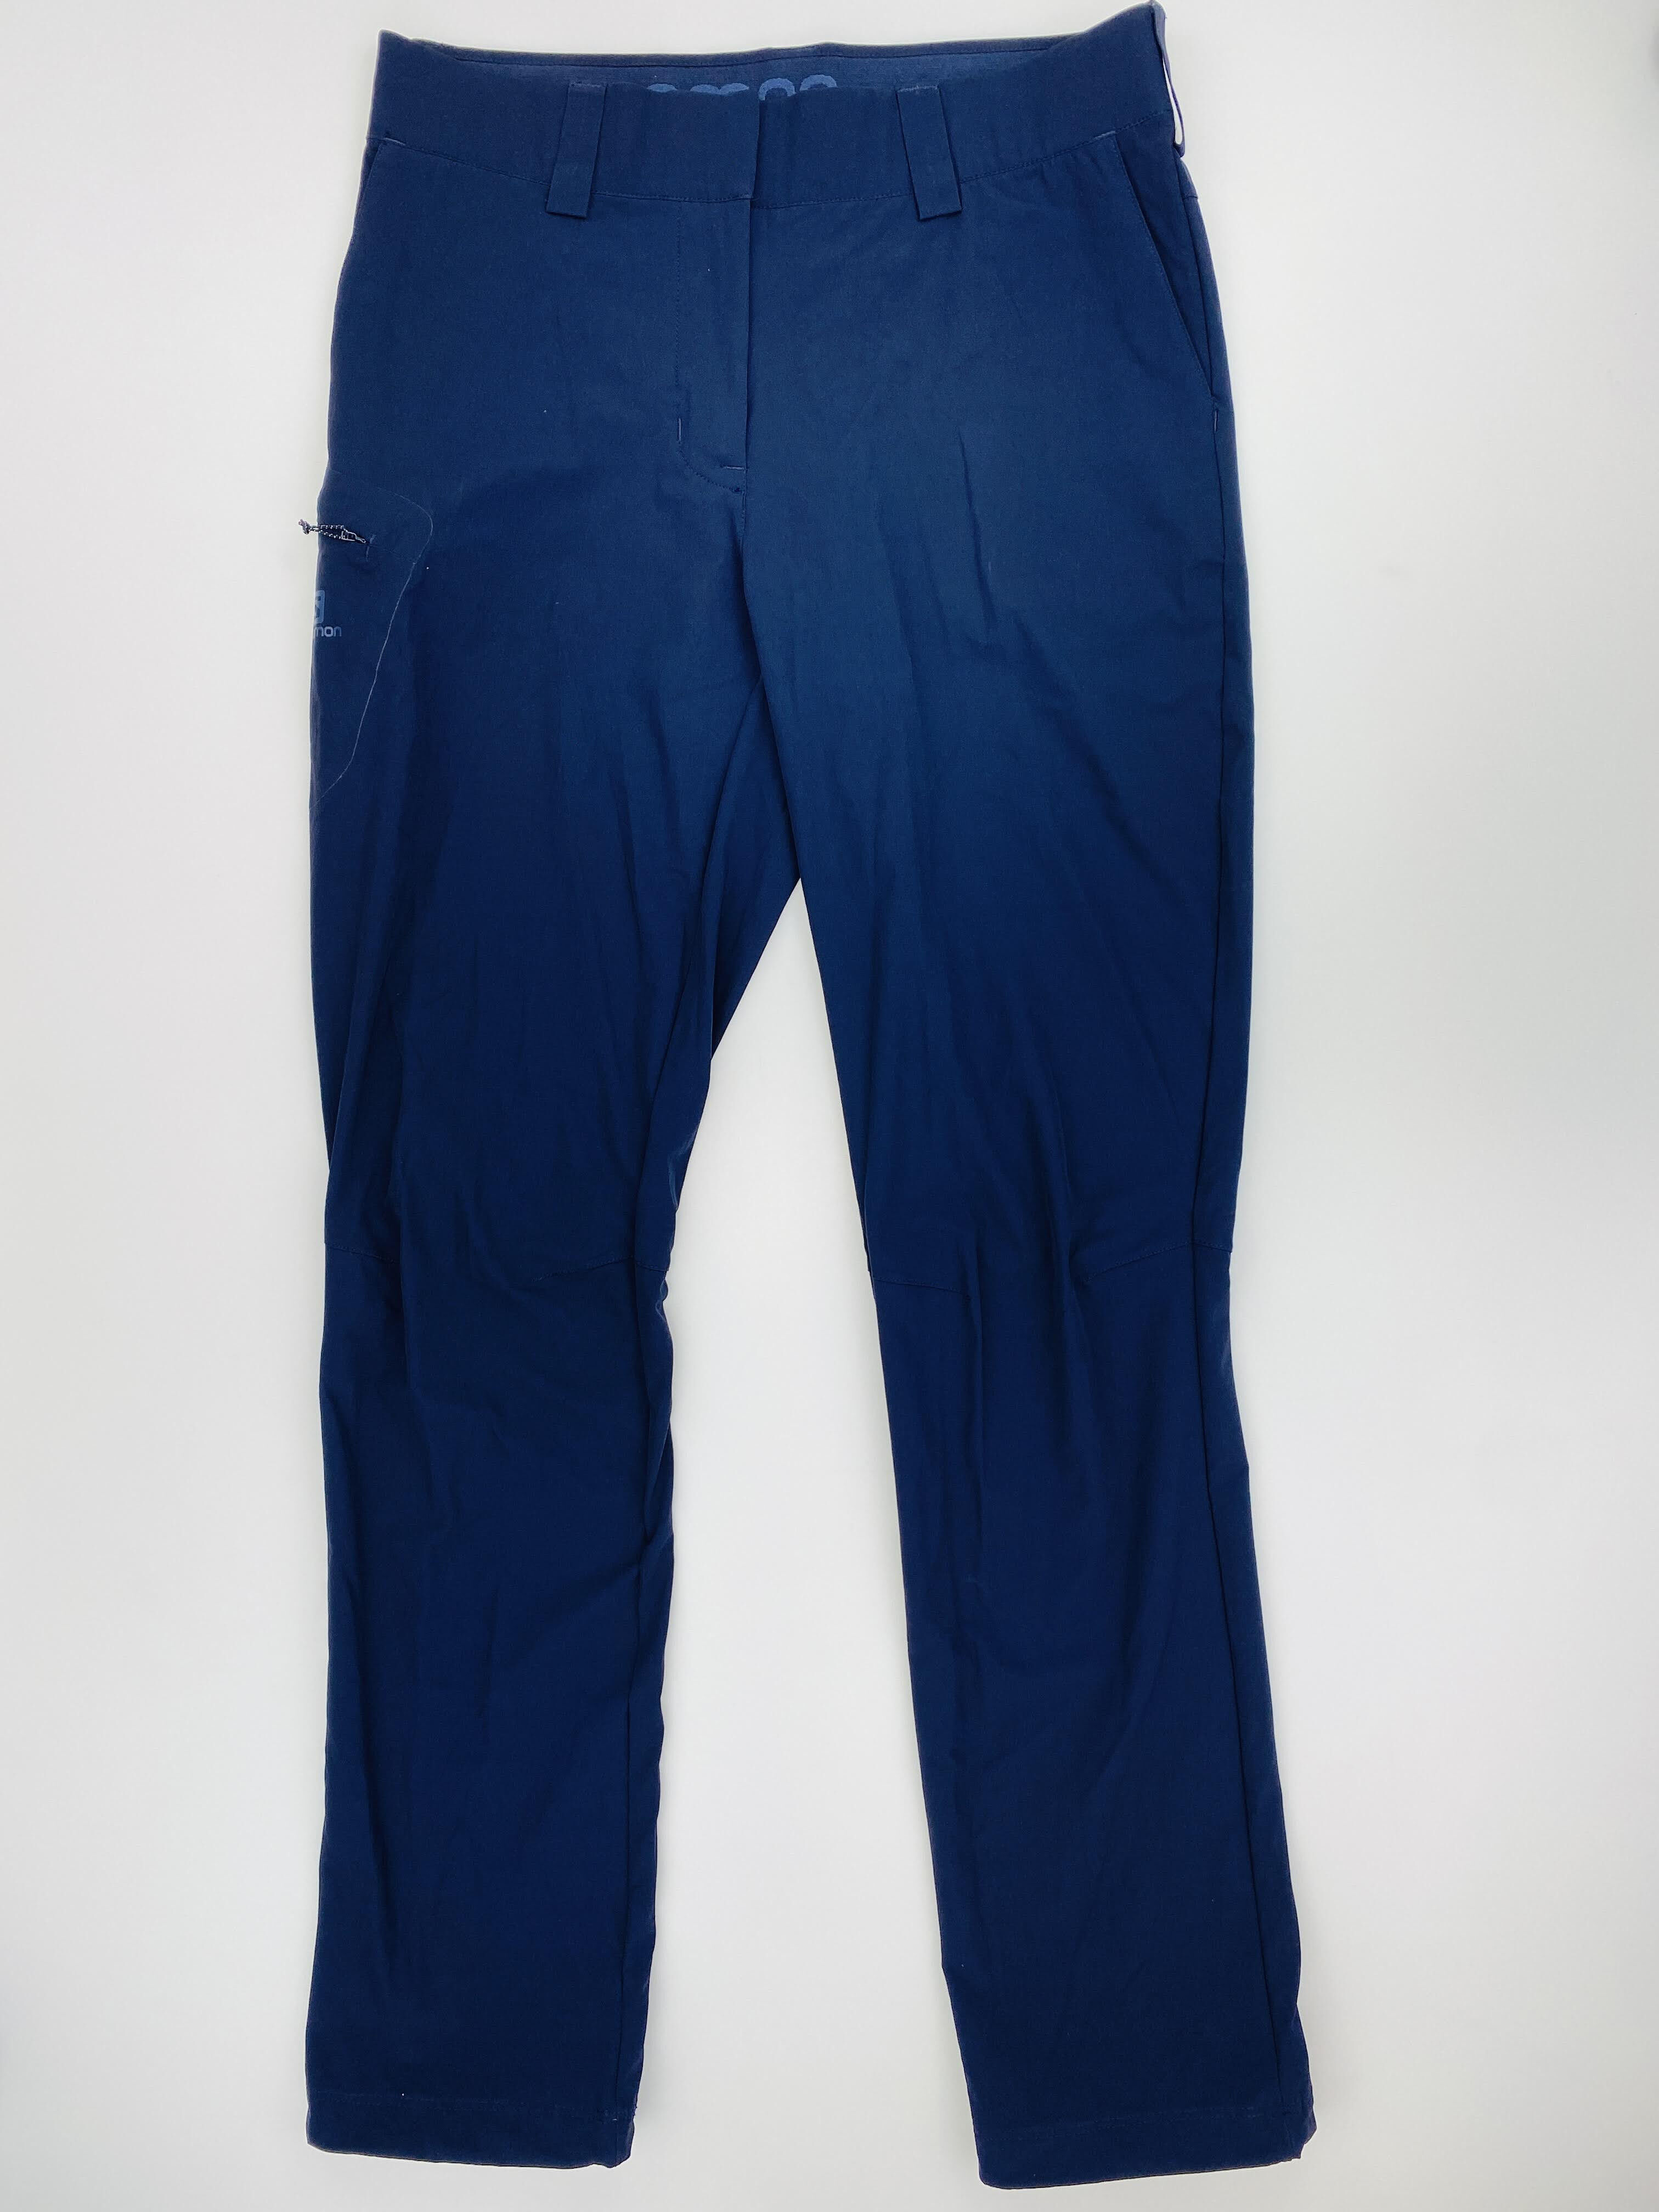 Salomon Pants Exo Motion Long Tight - Second Hand Walking trousers - Men's - Blue - M | Hardloop